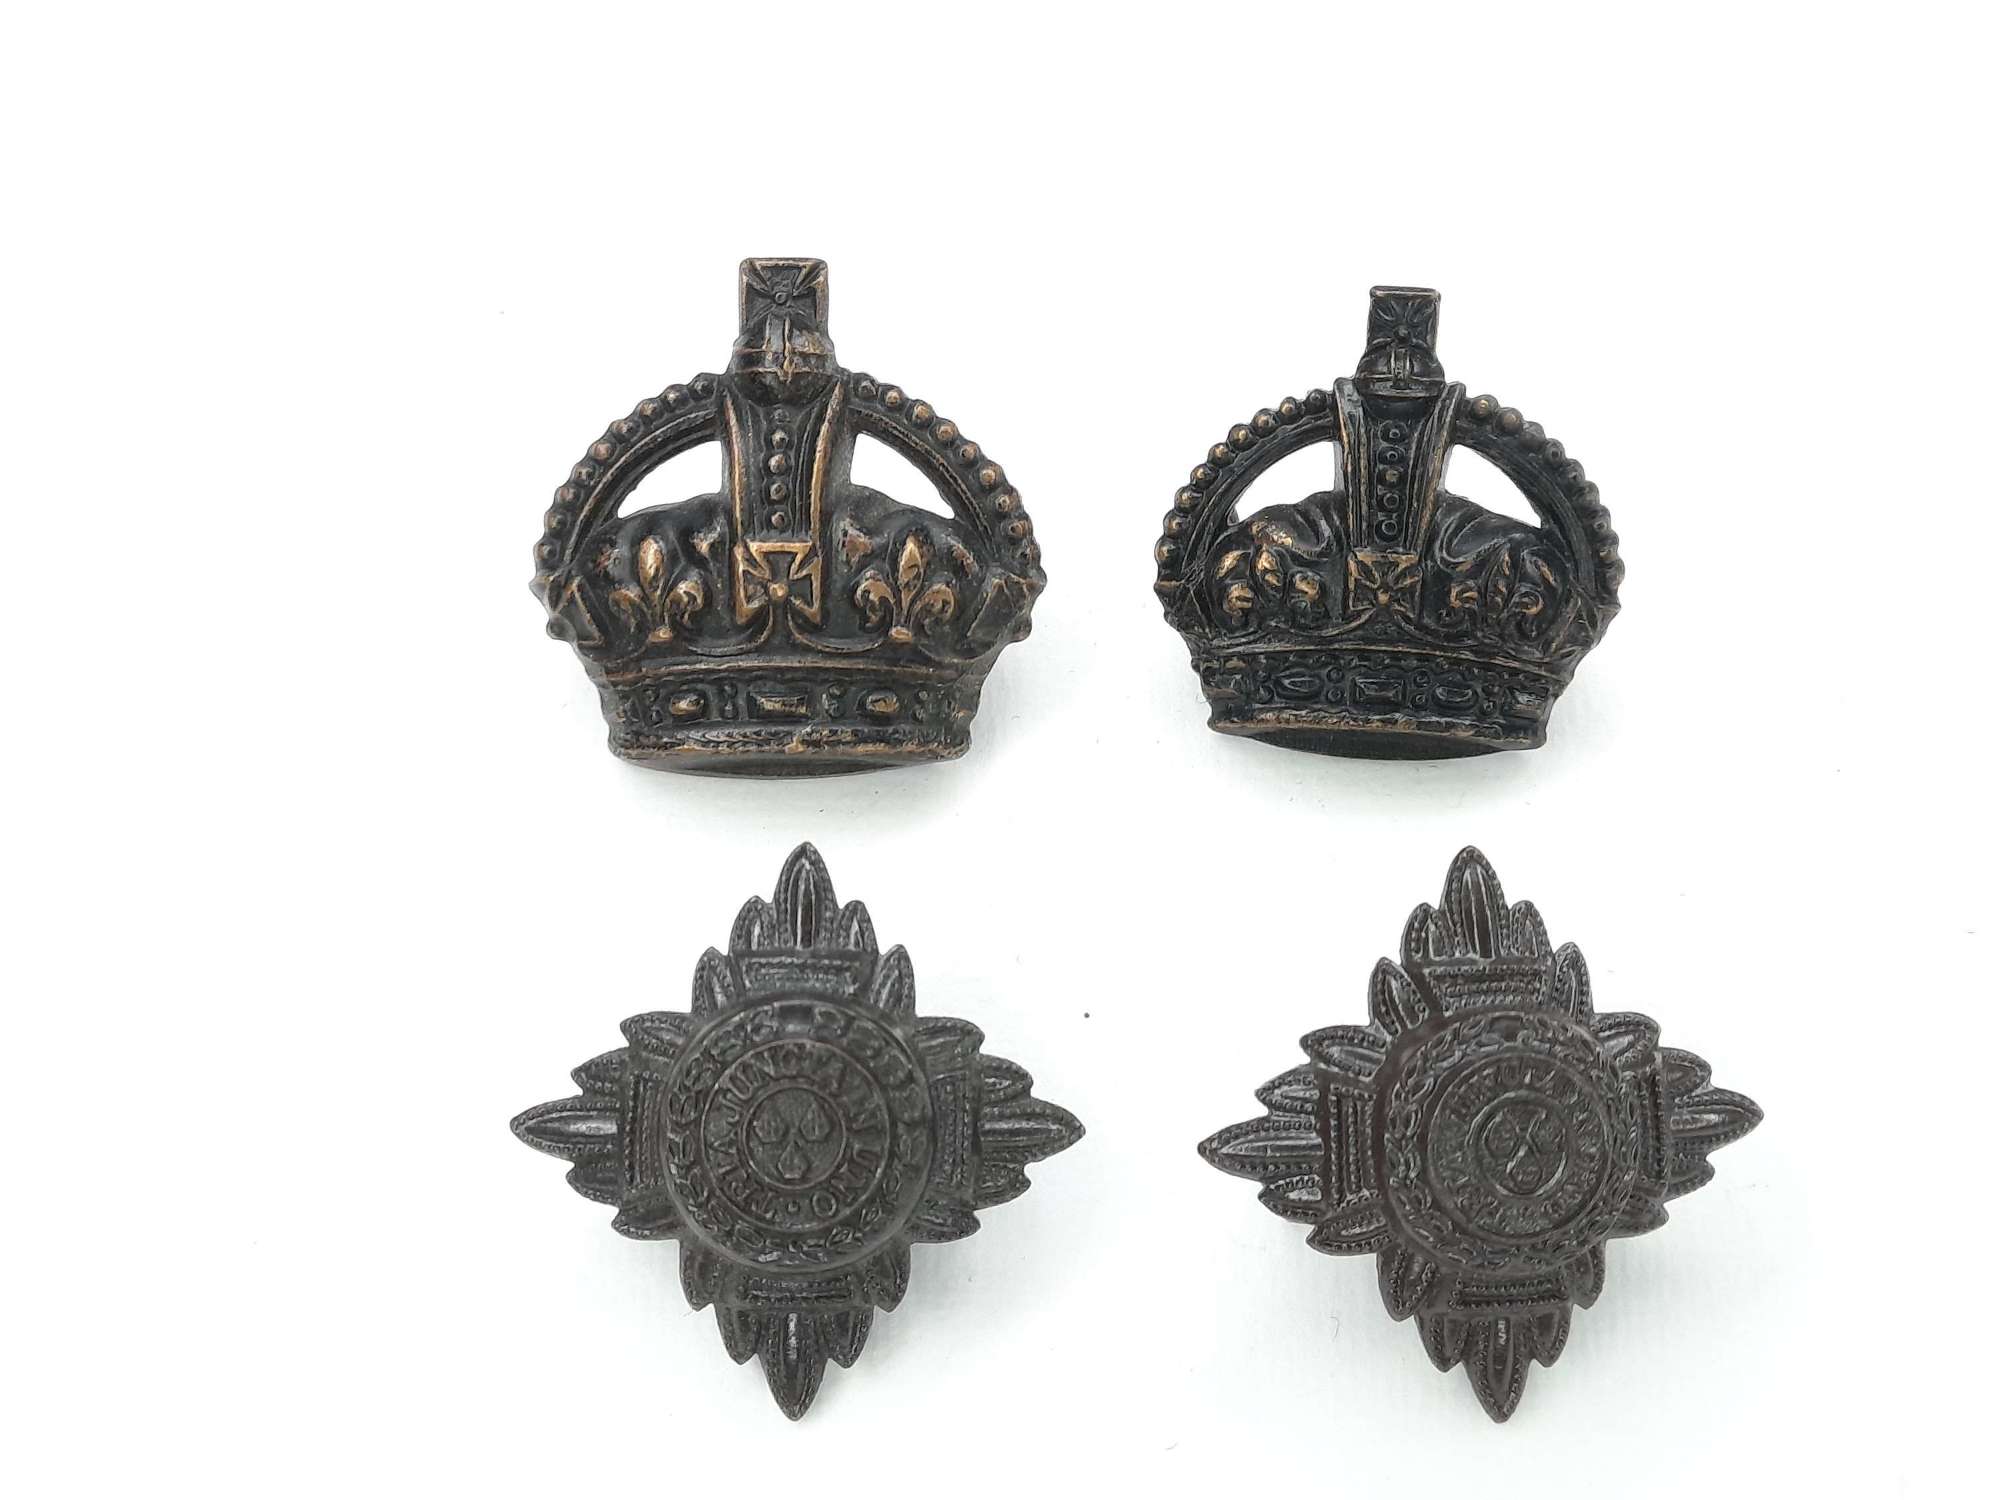 WW2 Blackened Brass Officer’s Crowns